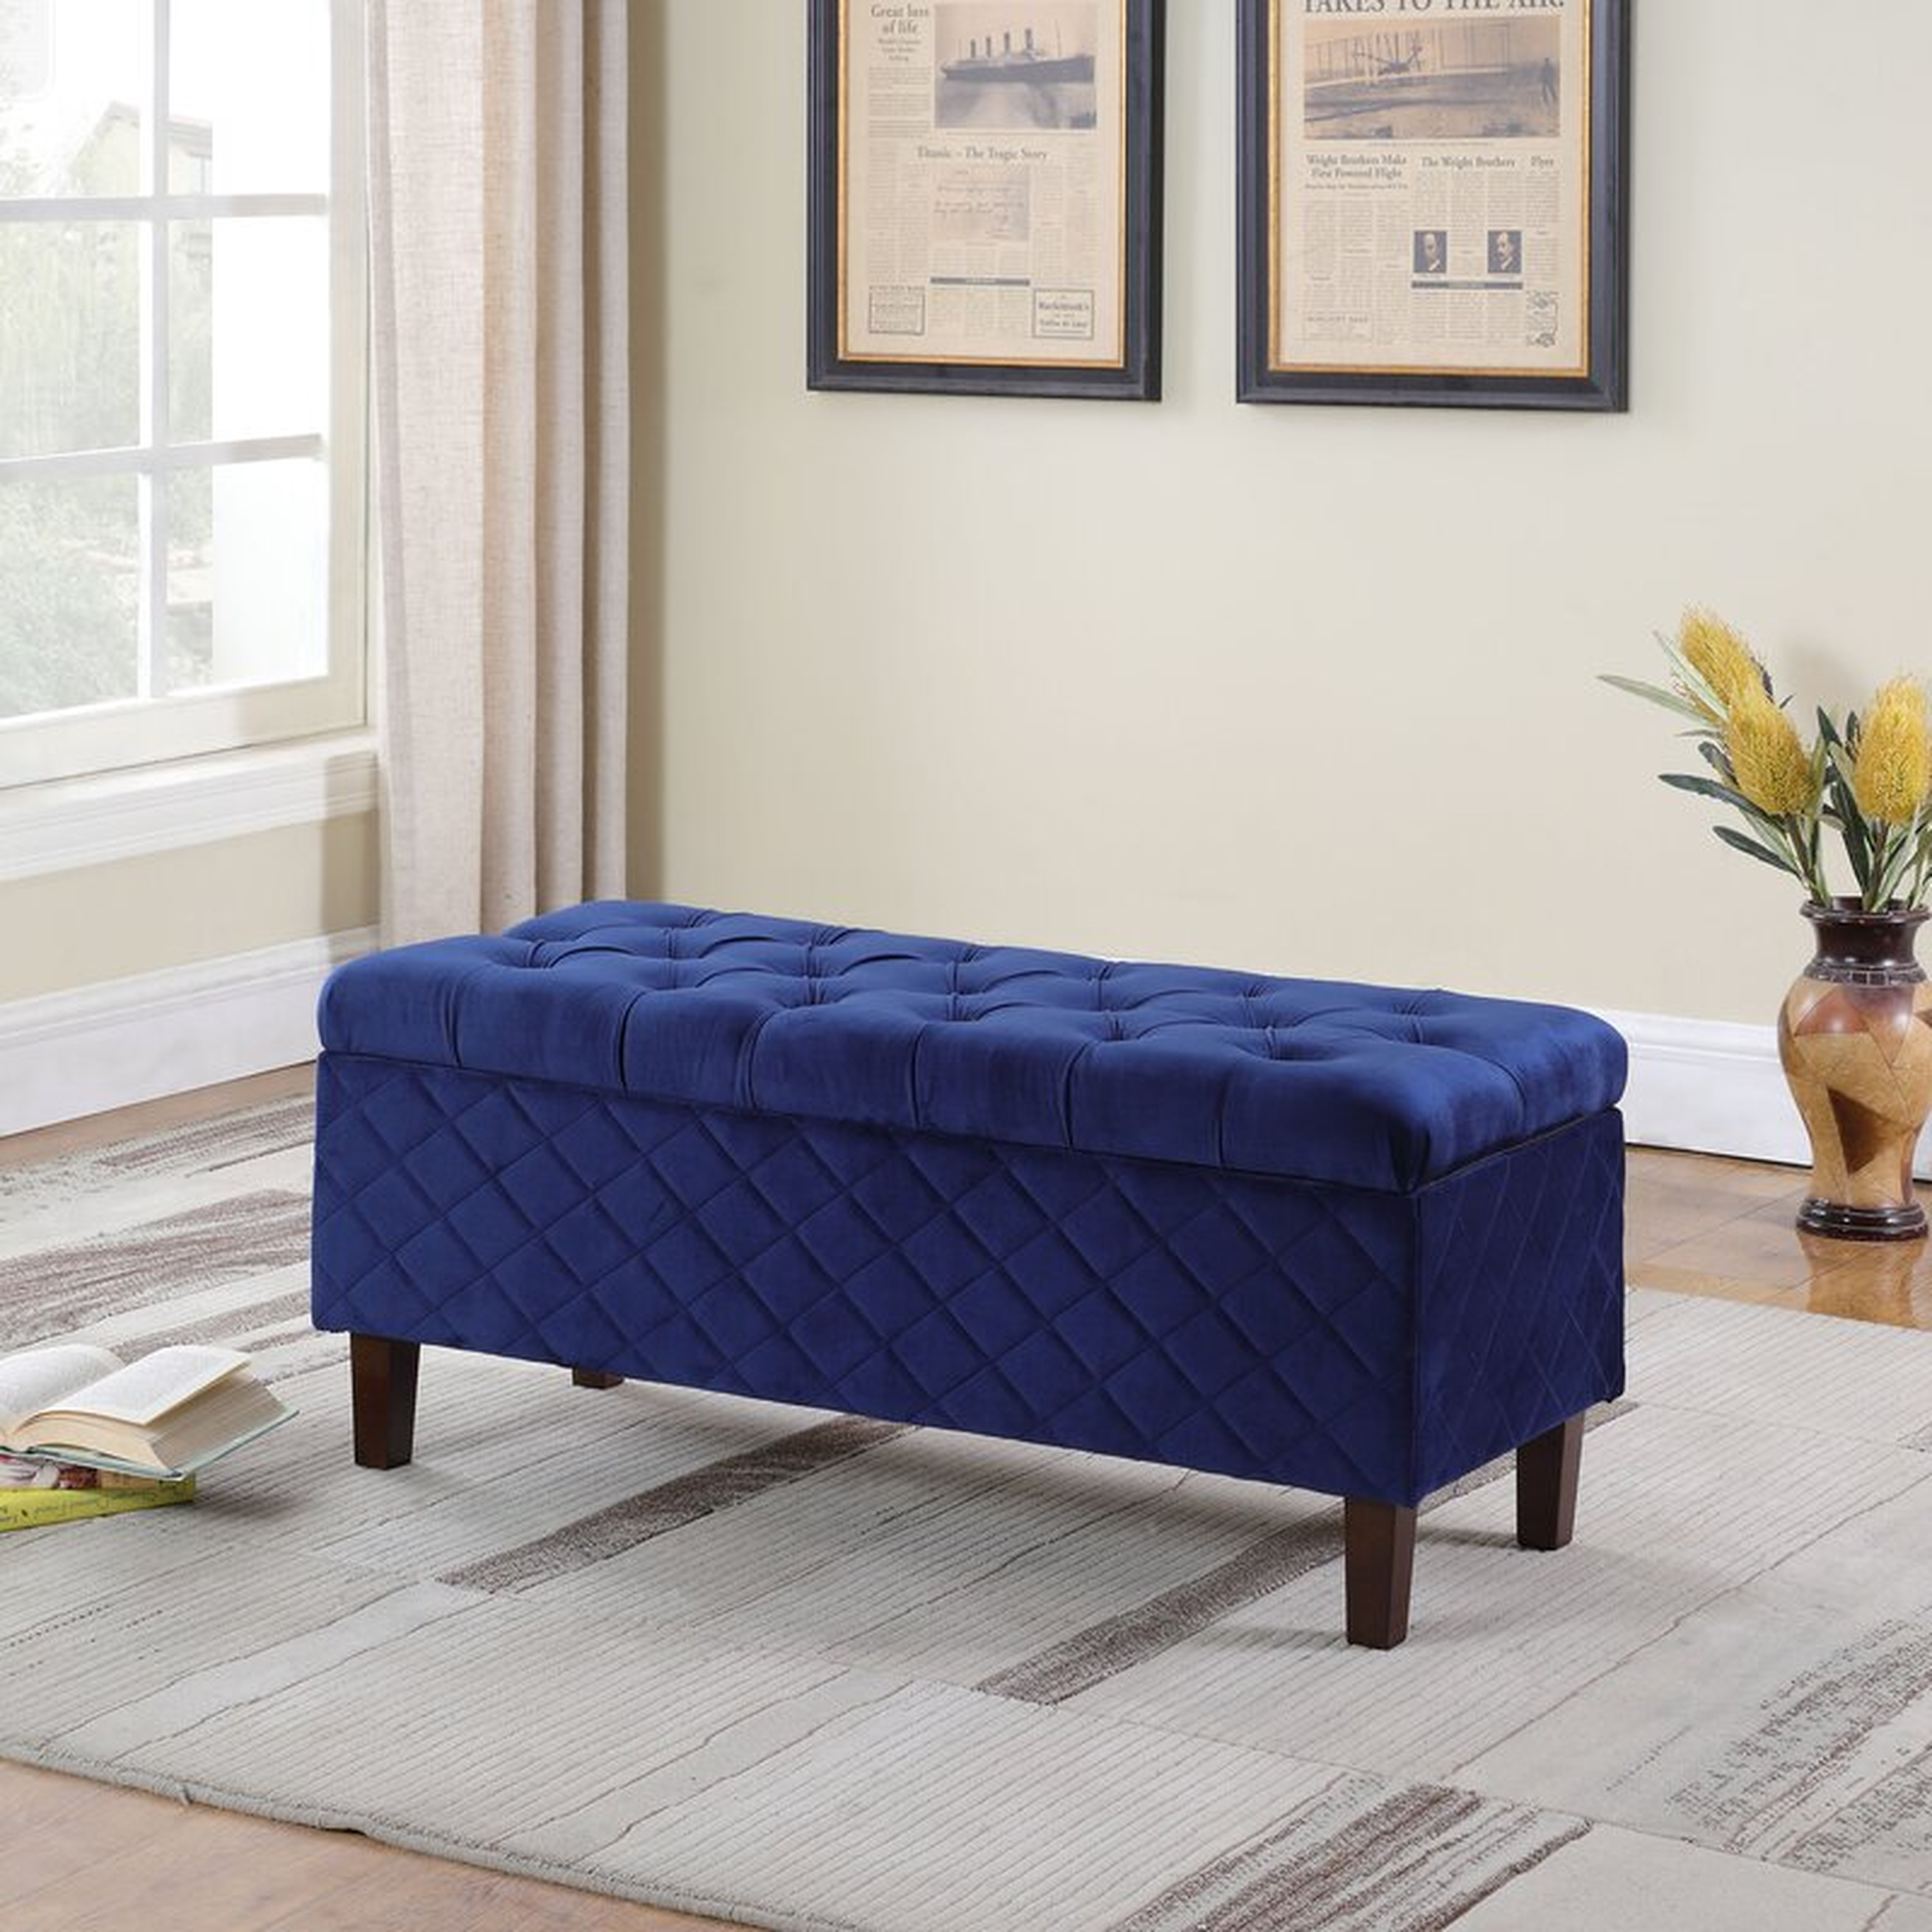 Canaan Upholstered Storage Bench - Wayfair